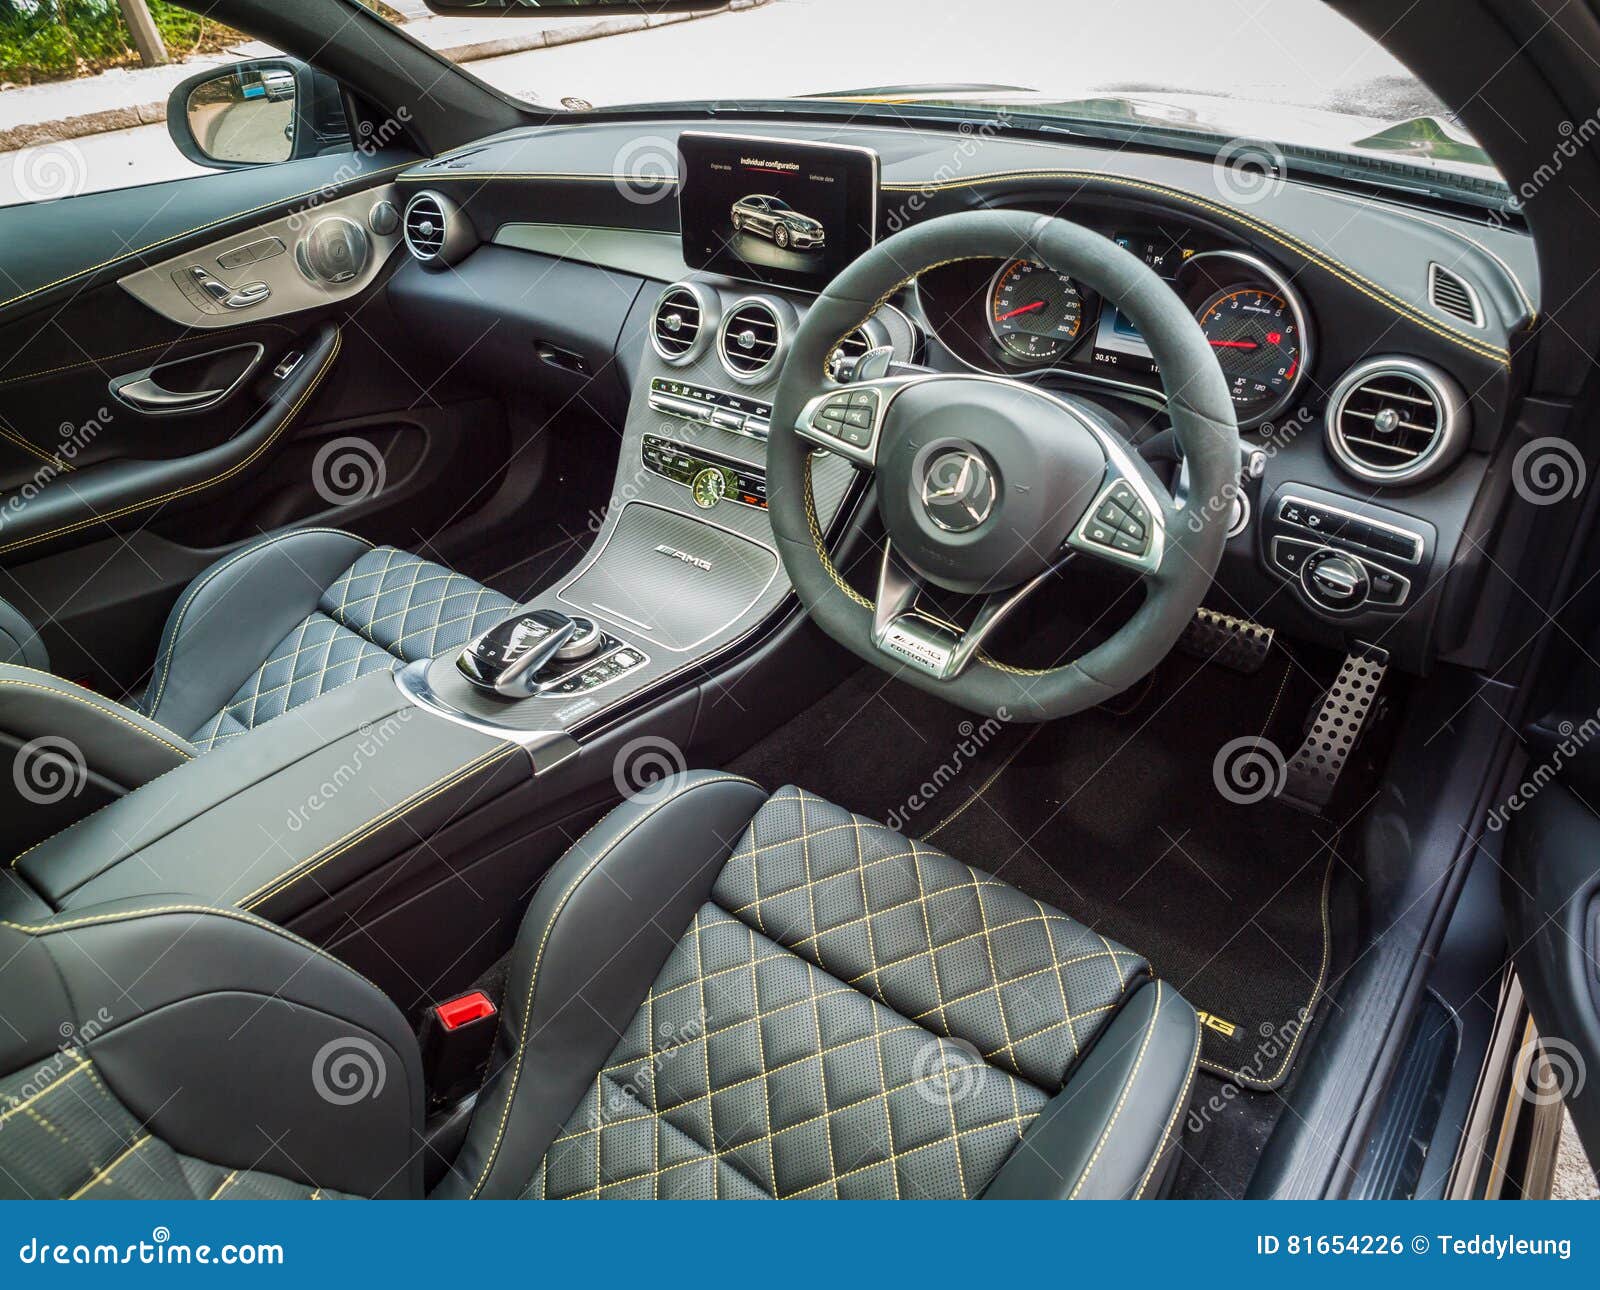 compression sweater Darken Mercedes-AMG C 63 S Coupe Interior Editorial Photo - Image of gear,  sportback: 81654226